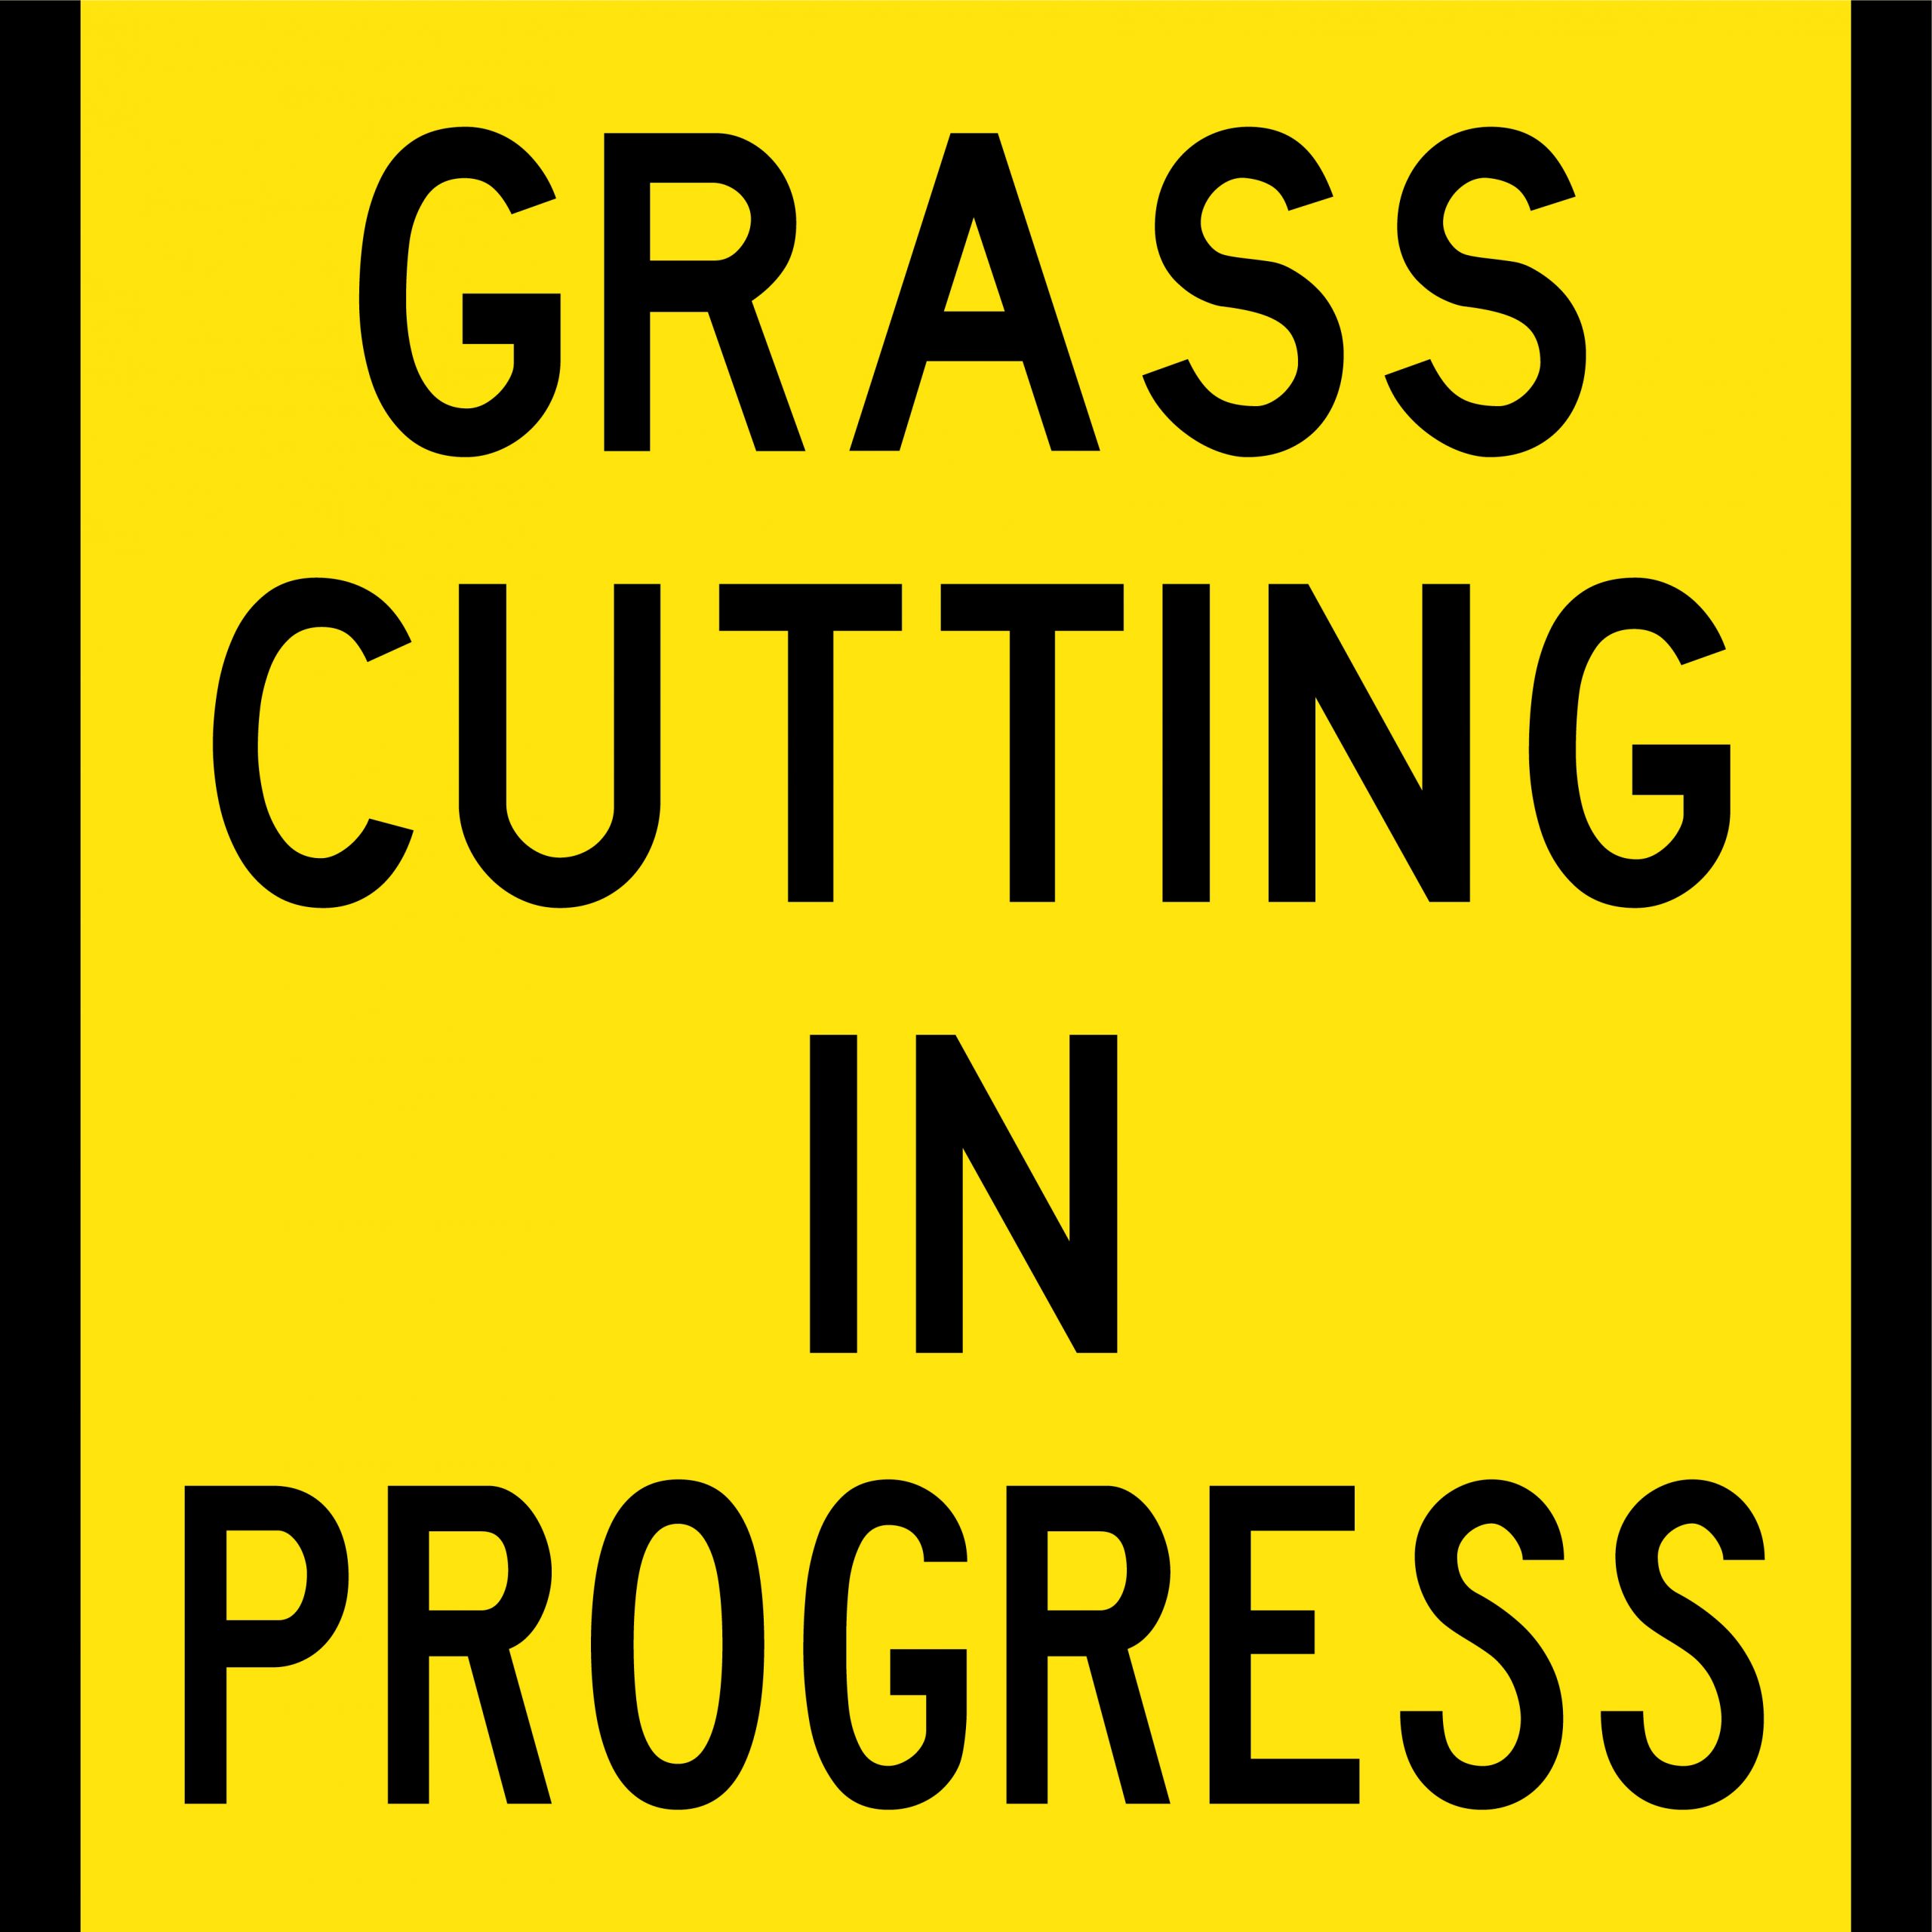 UNIFORM SAFETY 600X600MM CL1 CORFLUTE GRASS CUTTING IN PROGRESS